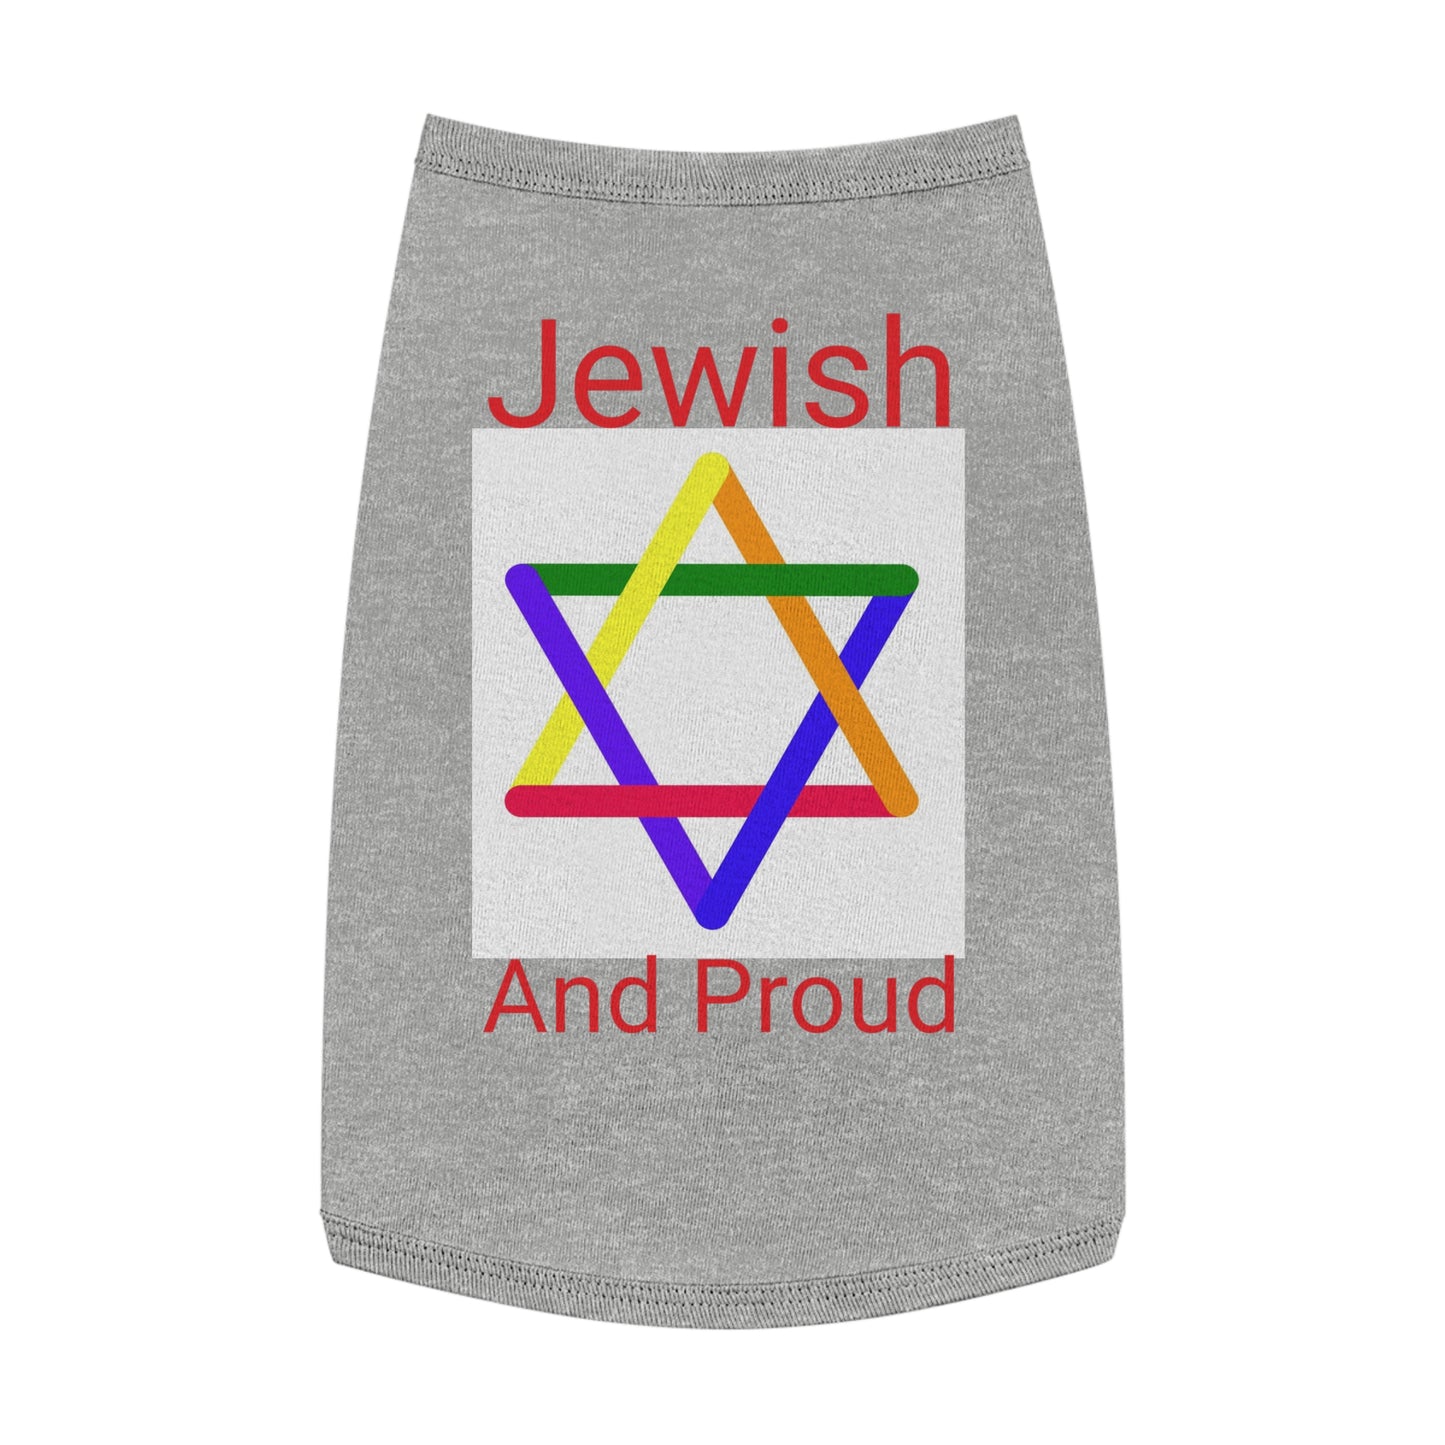 "Jewish  and Proud" Tank Top